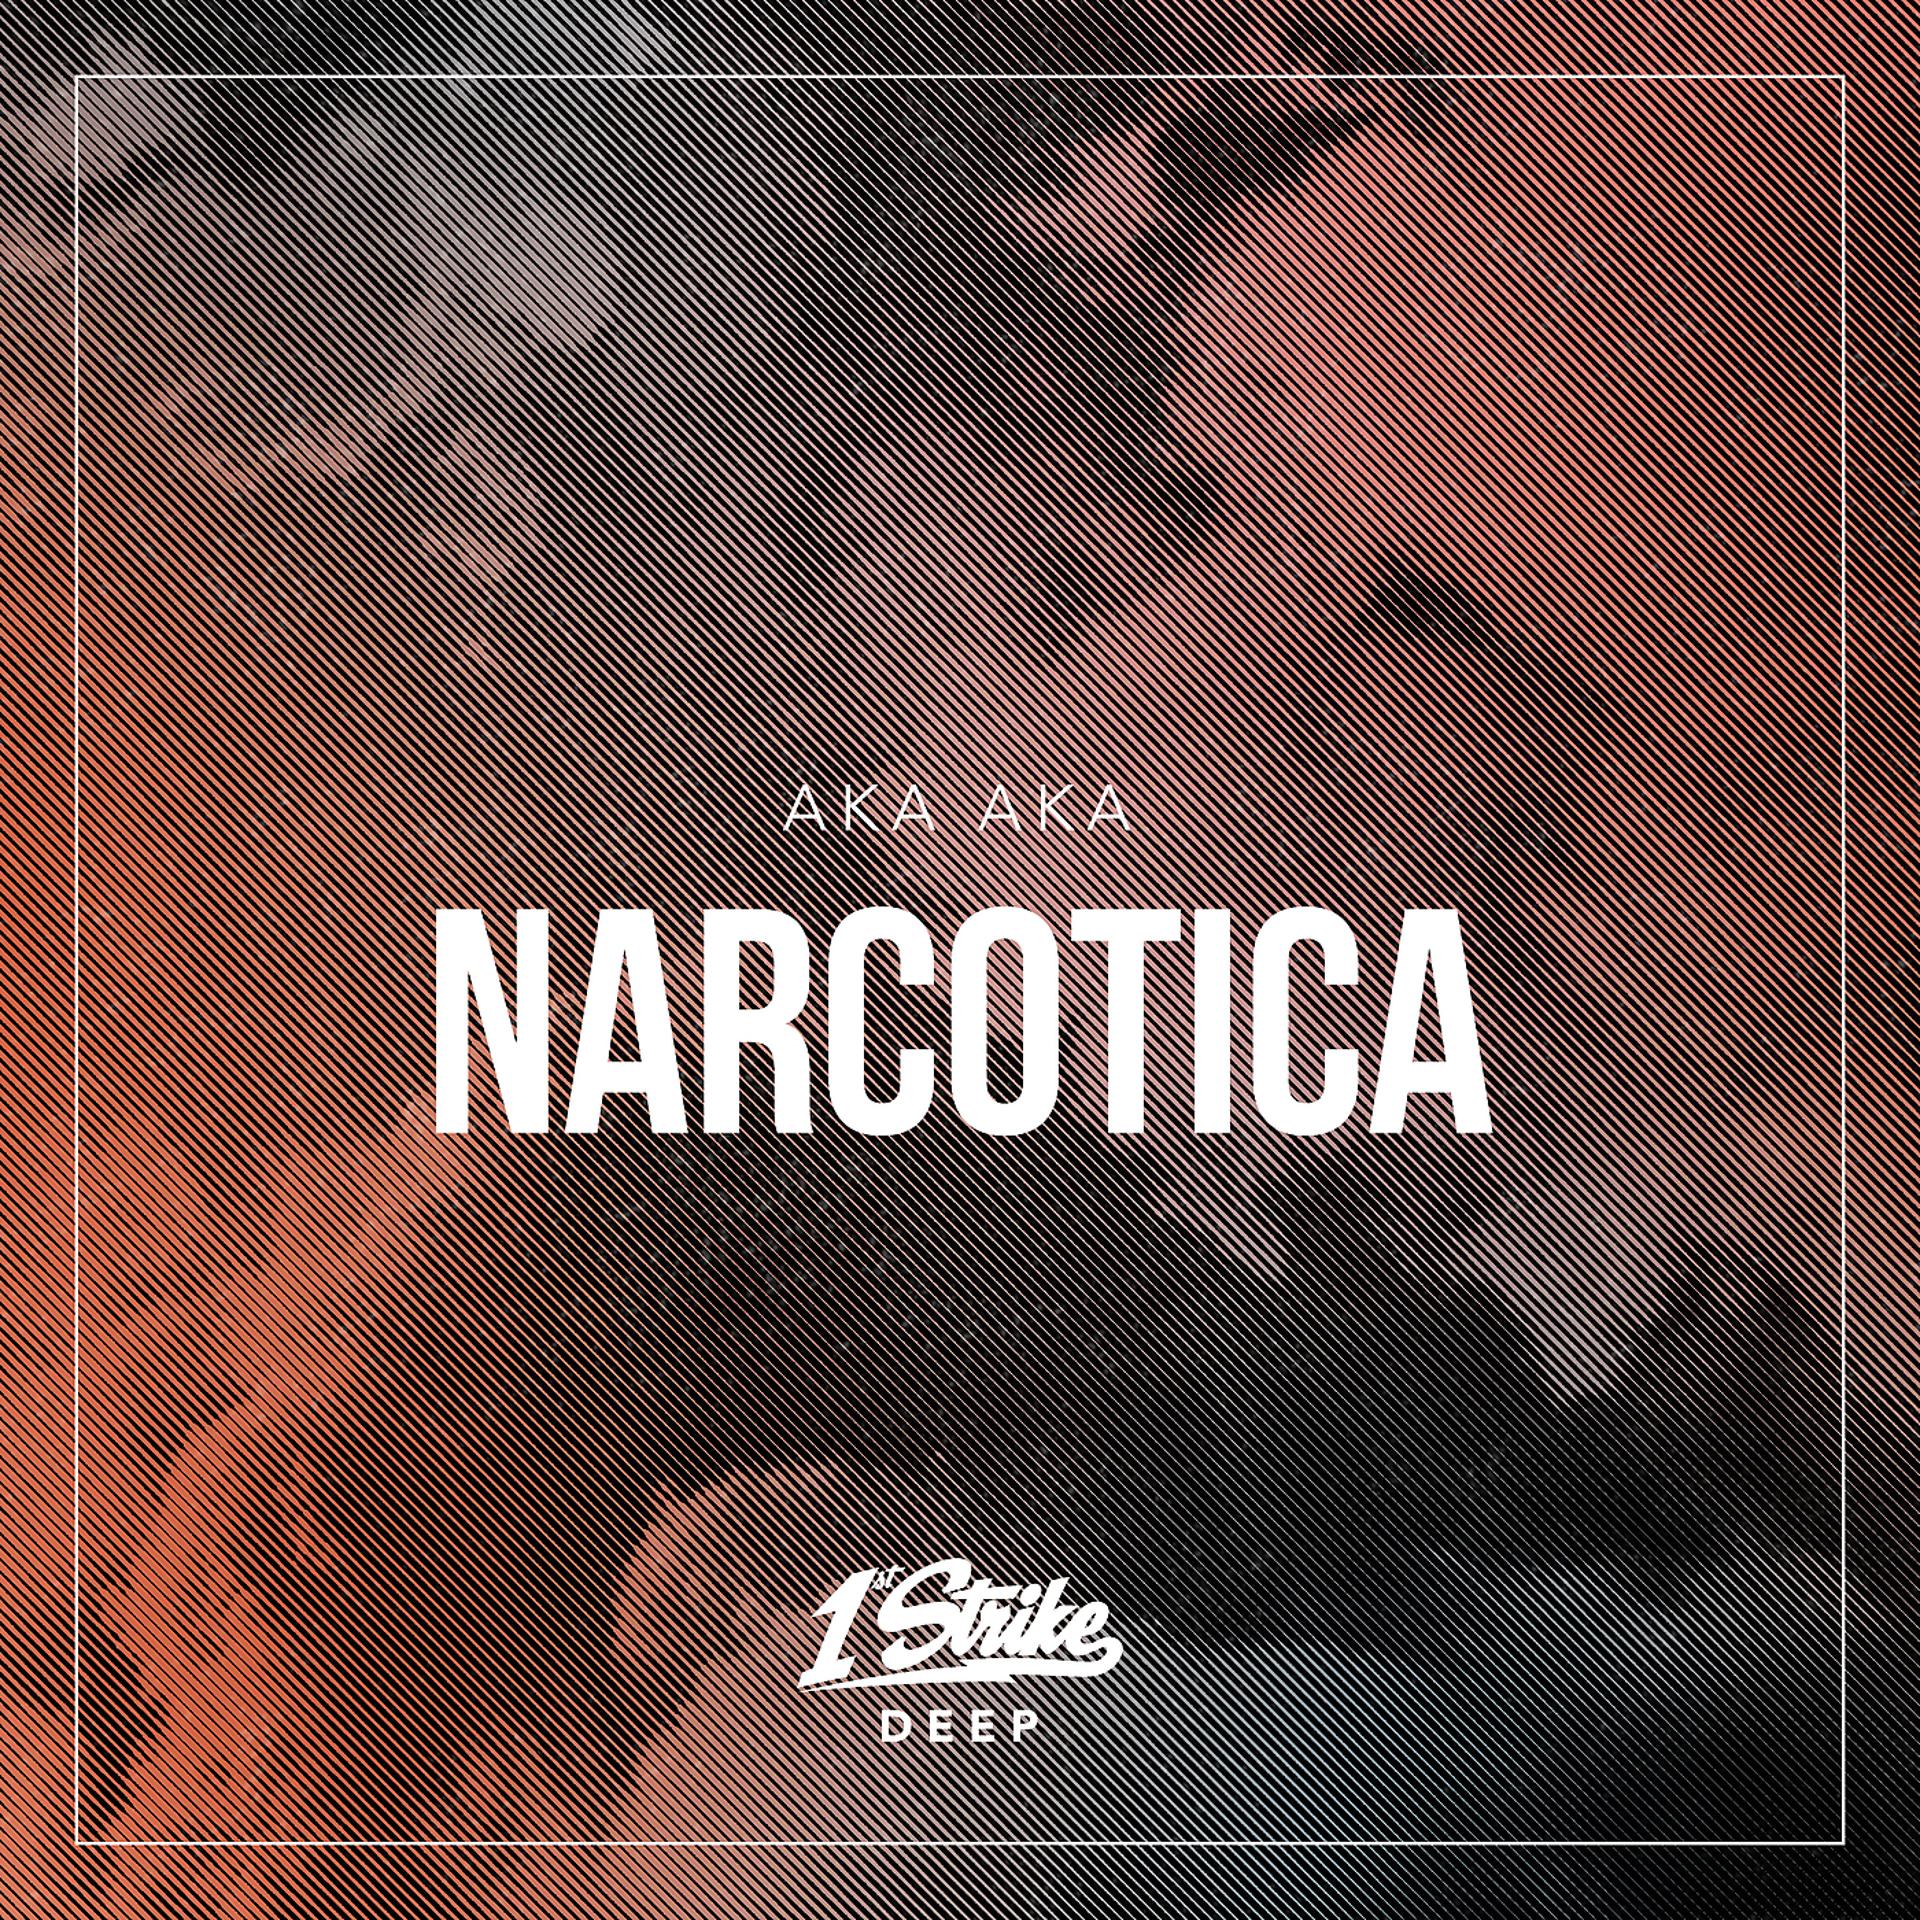 Постер альбома Narcotica